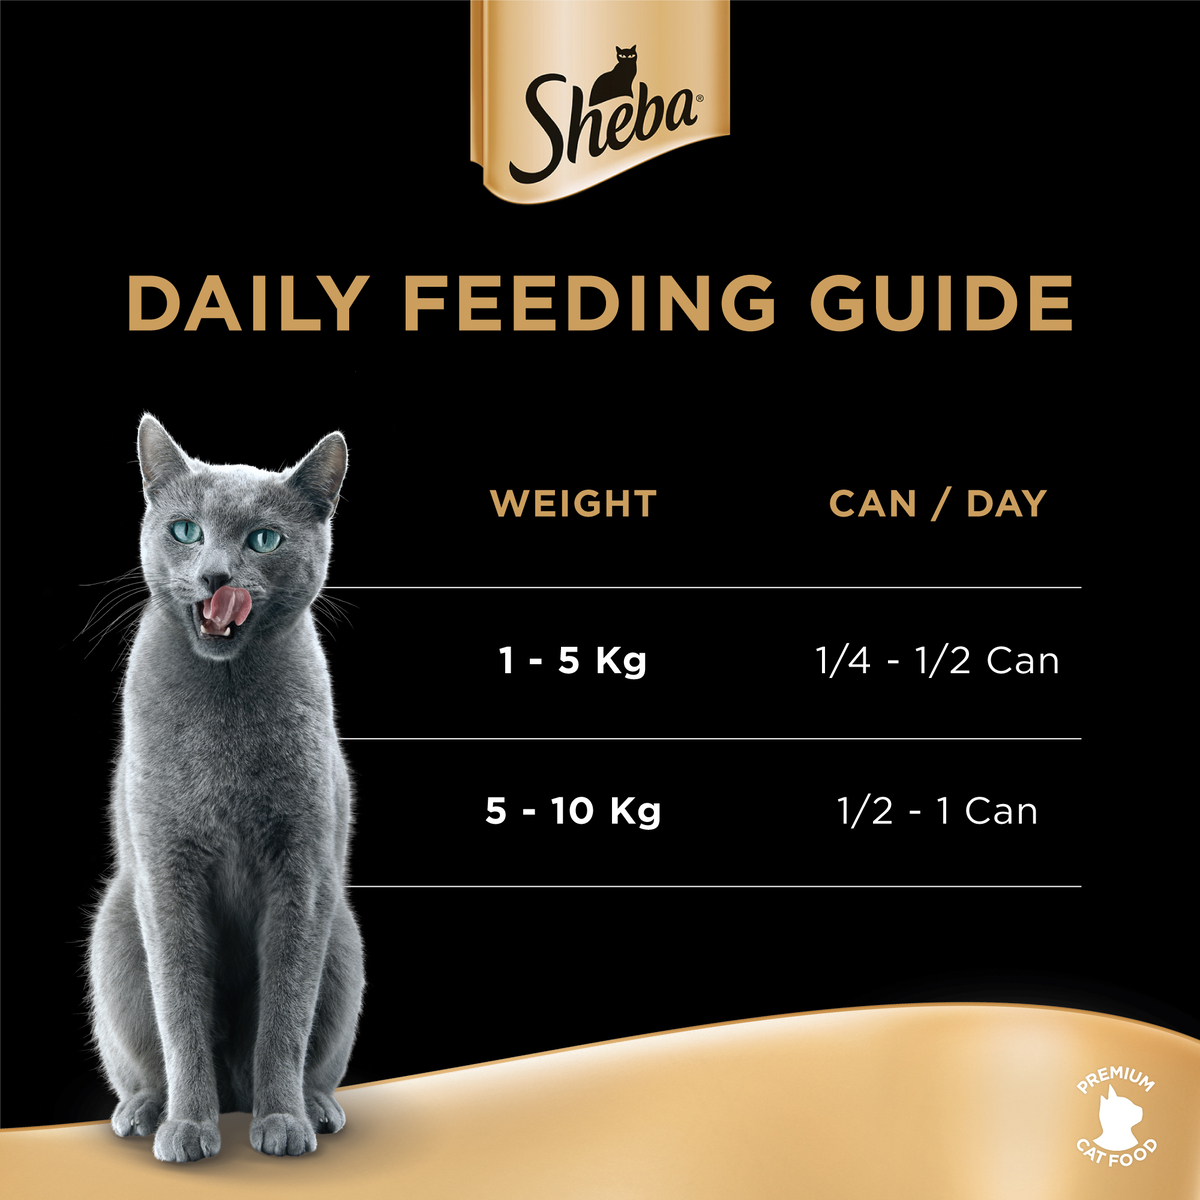 Sheba Succulent Chicken Breast Cat Food 85 g